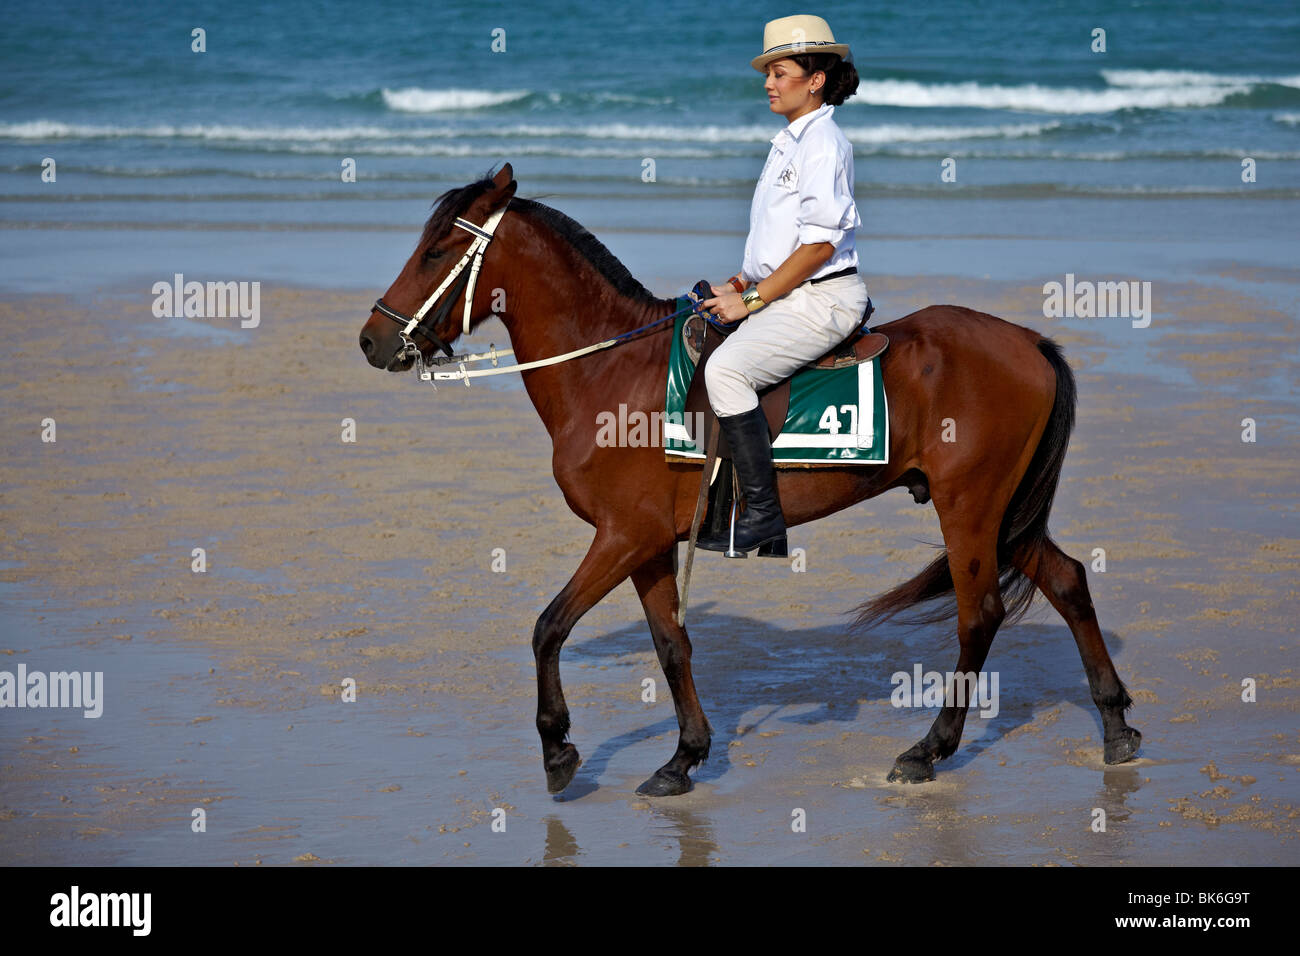 Woman riding a horse on a Thailand beach Stock Photo